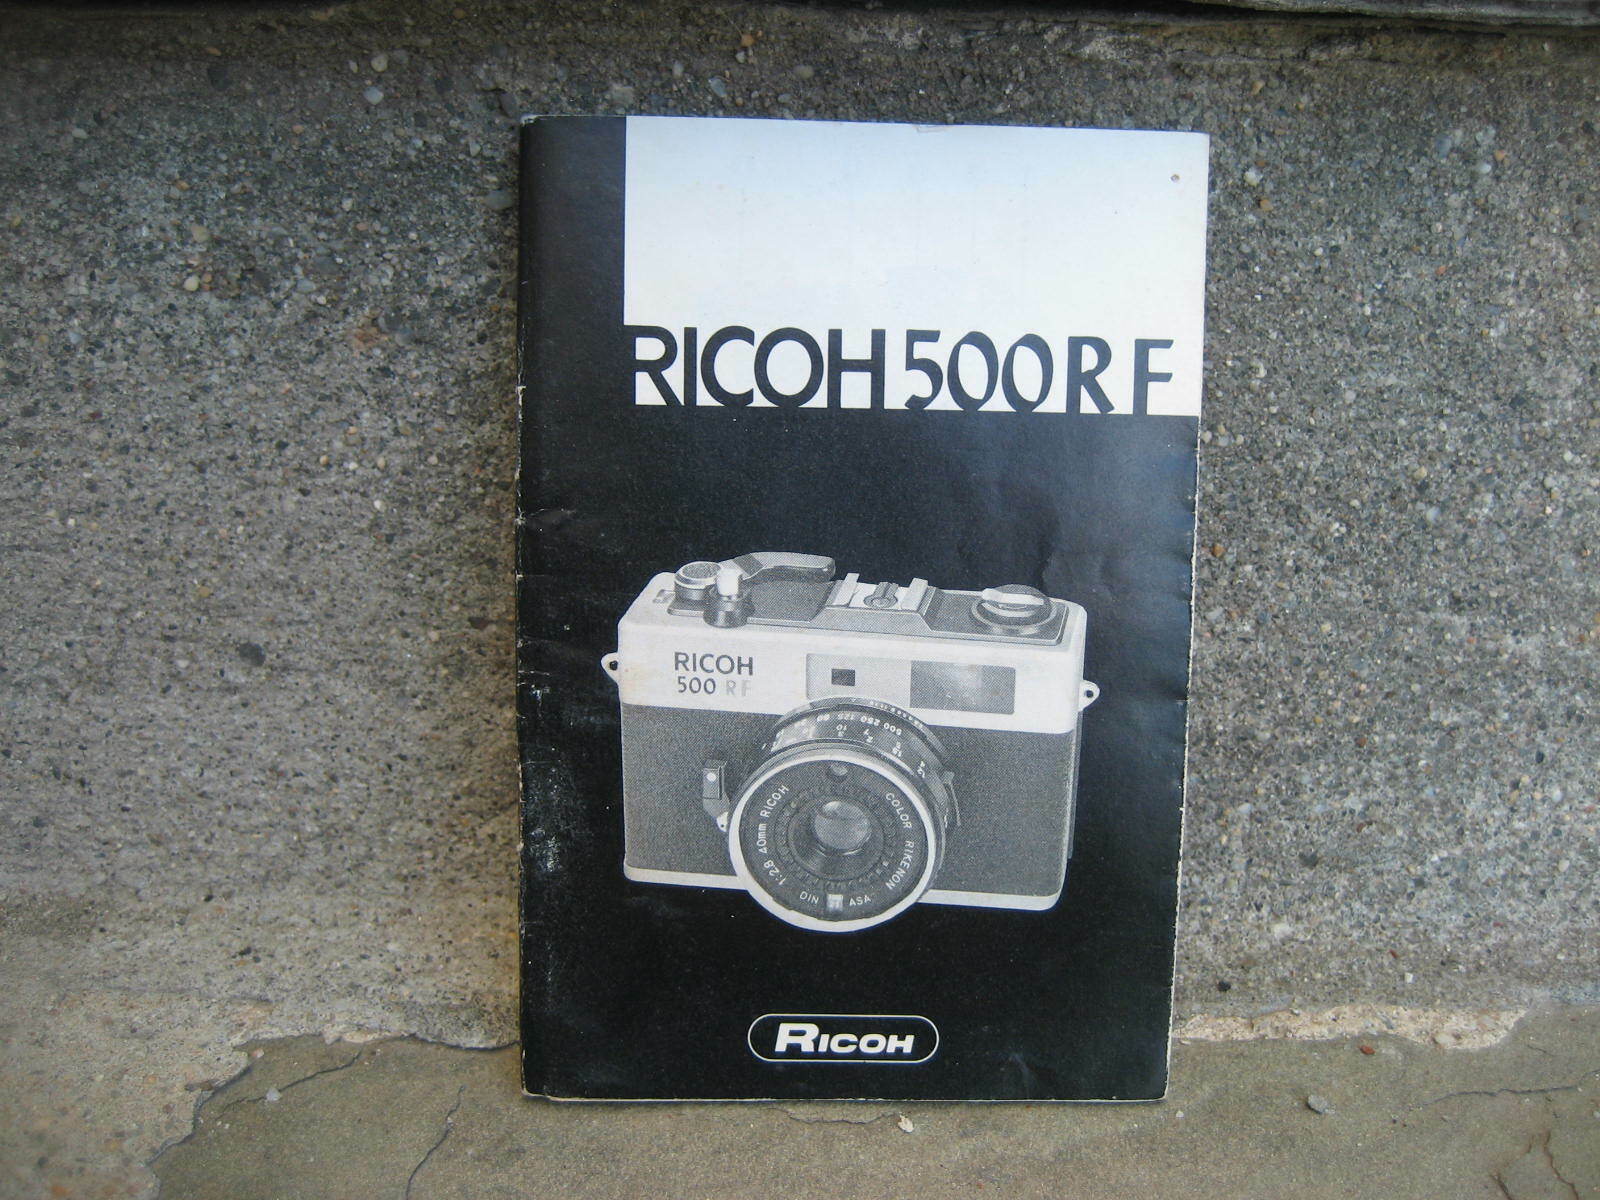 Ricoh 500rf Camera Instructions